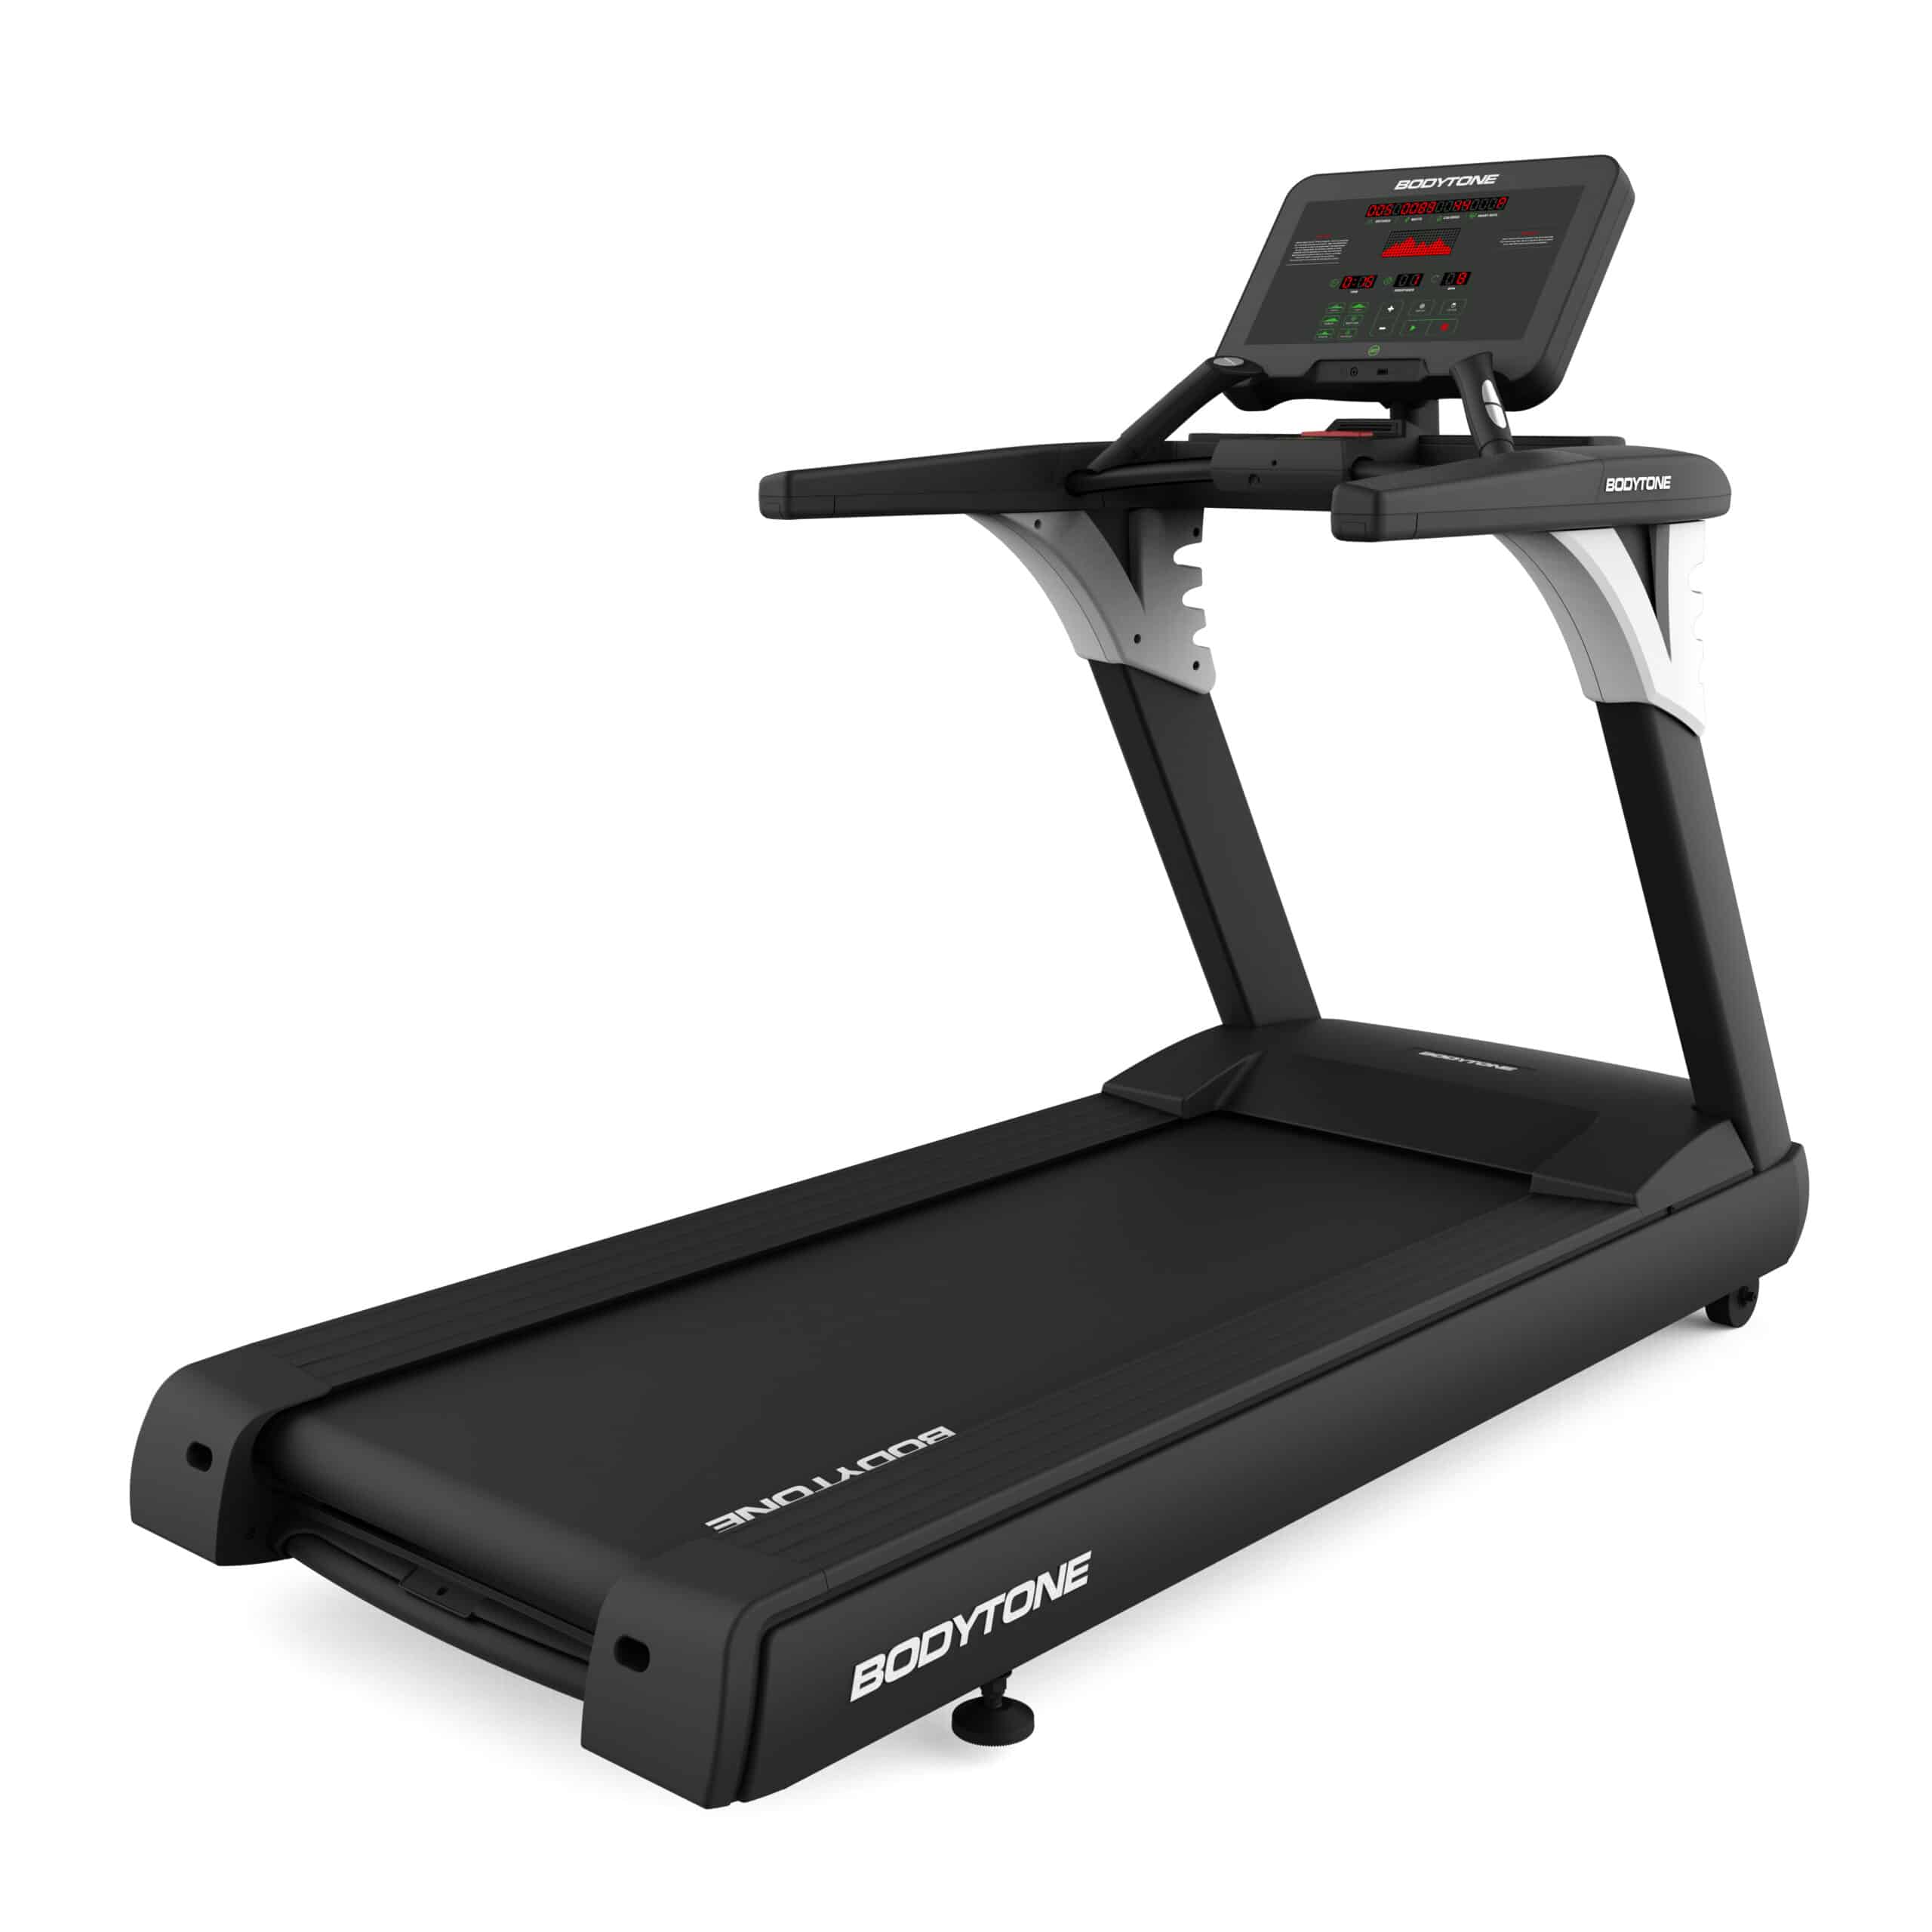 BODYTONE EVOT2+ Treadmill